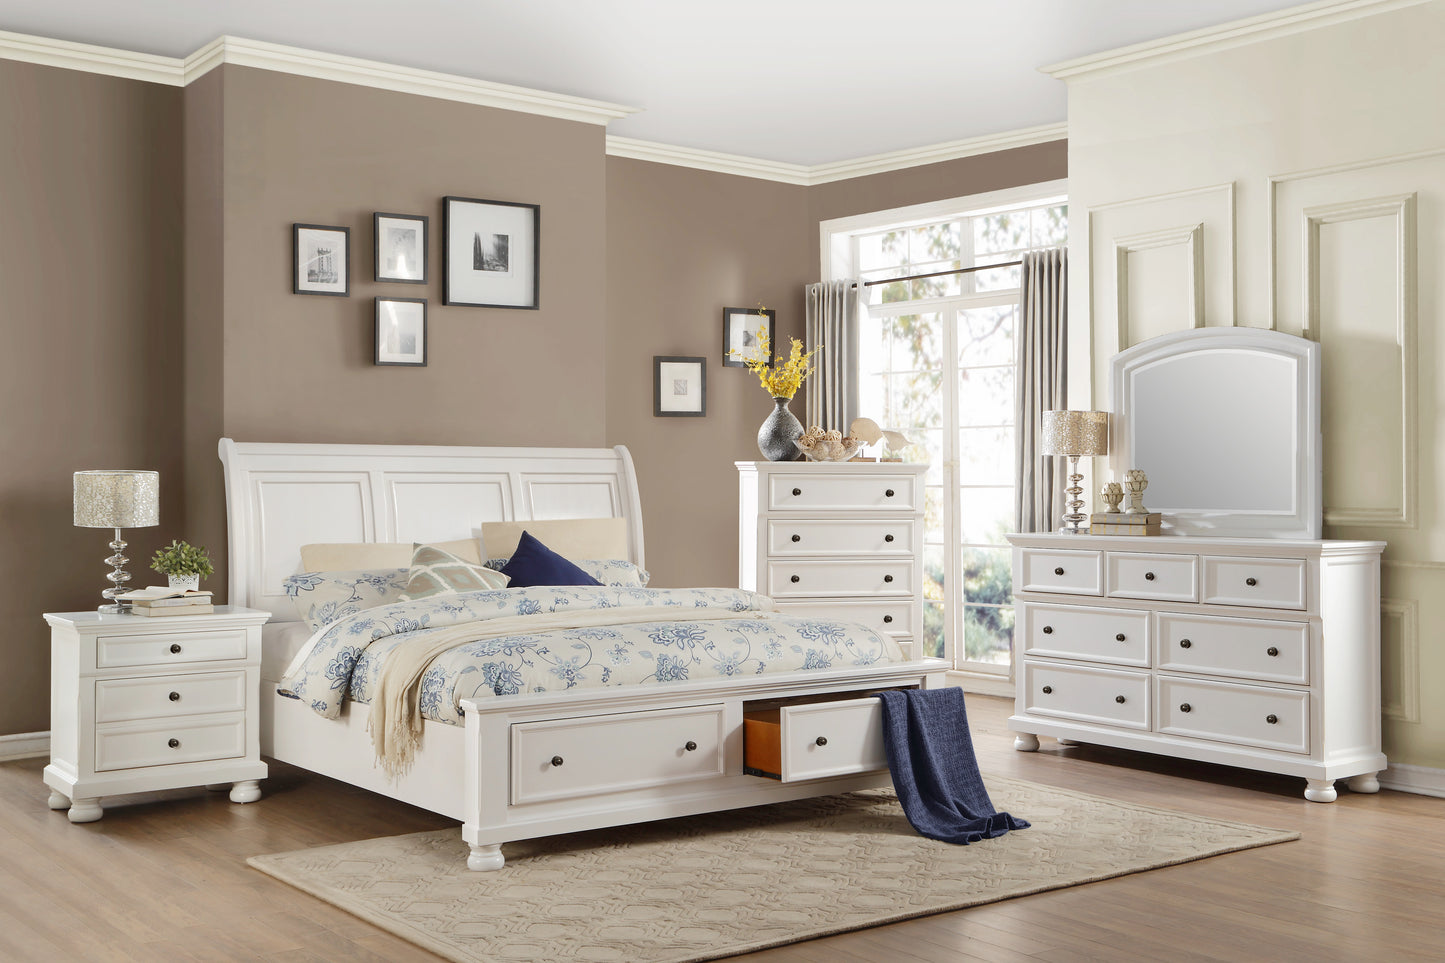 Lexington Cottage 4PC Bedroom Set E King Sleigh Storage Bed, Dresser, Mirror, Nightstand in White